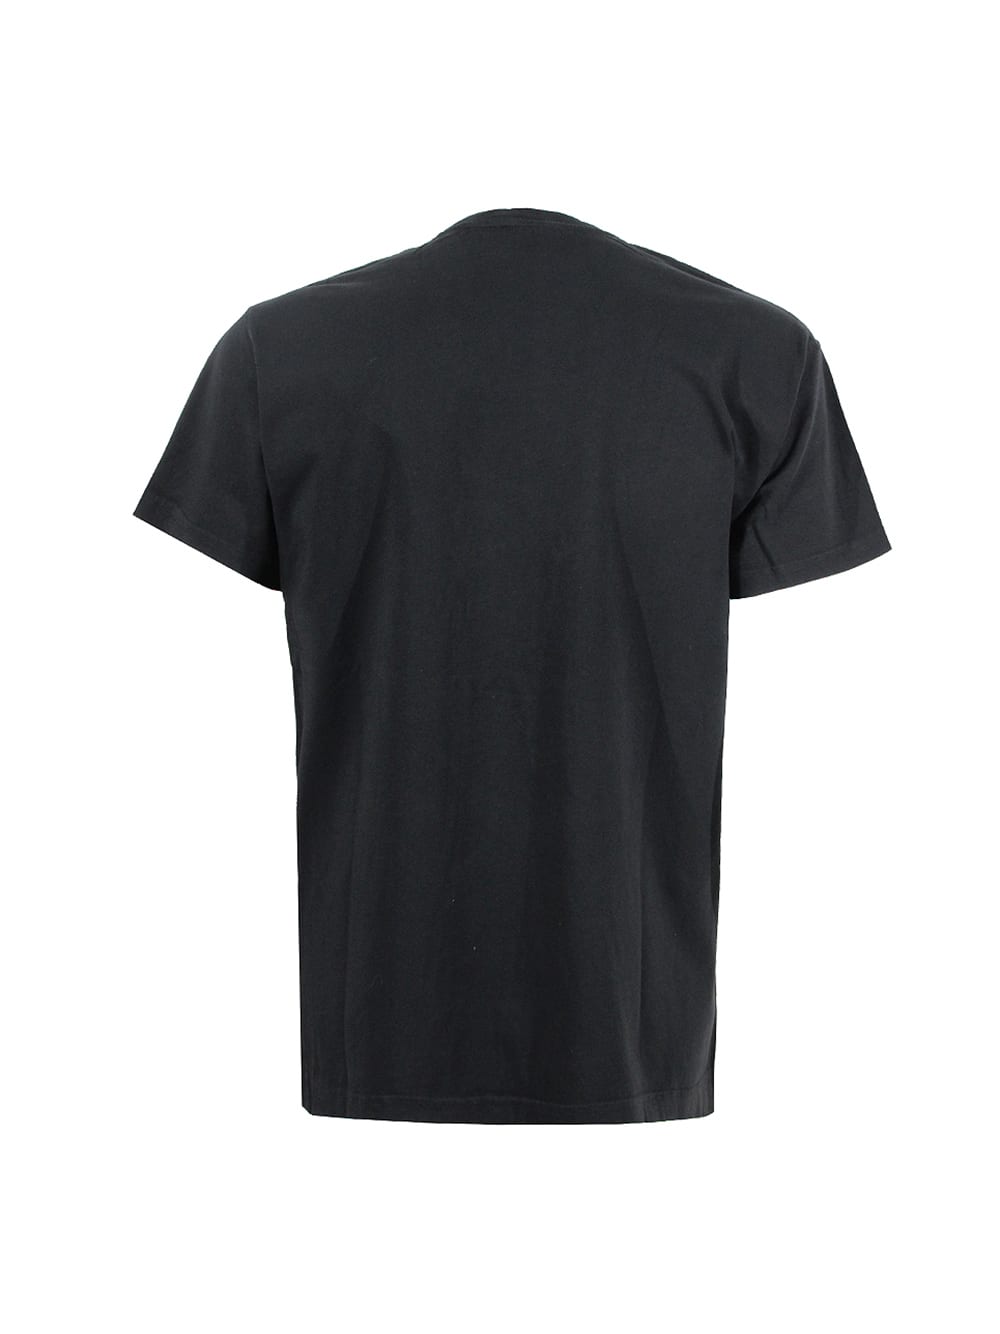 Shop N°21 T-shirt  In Black